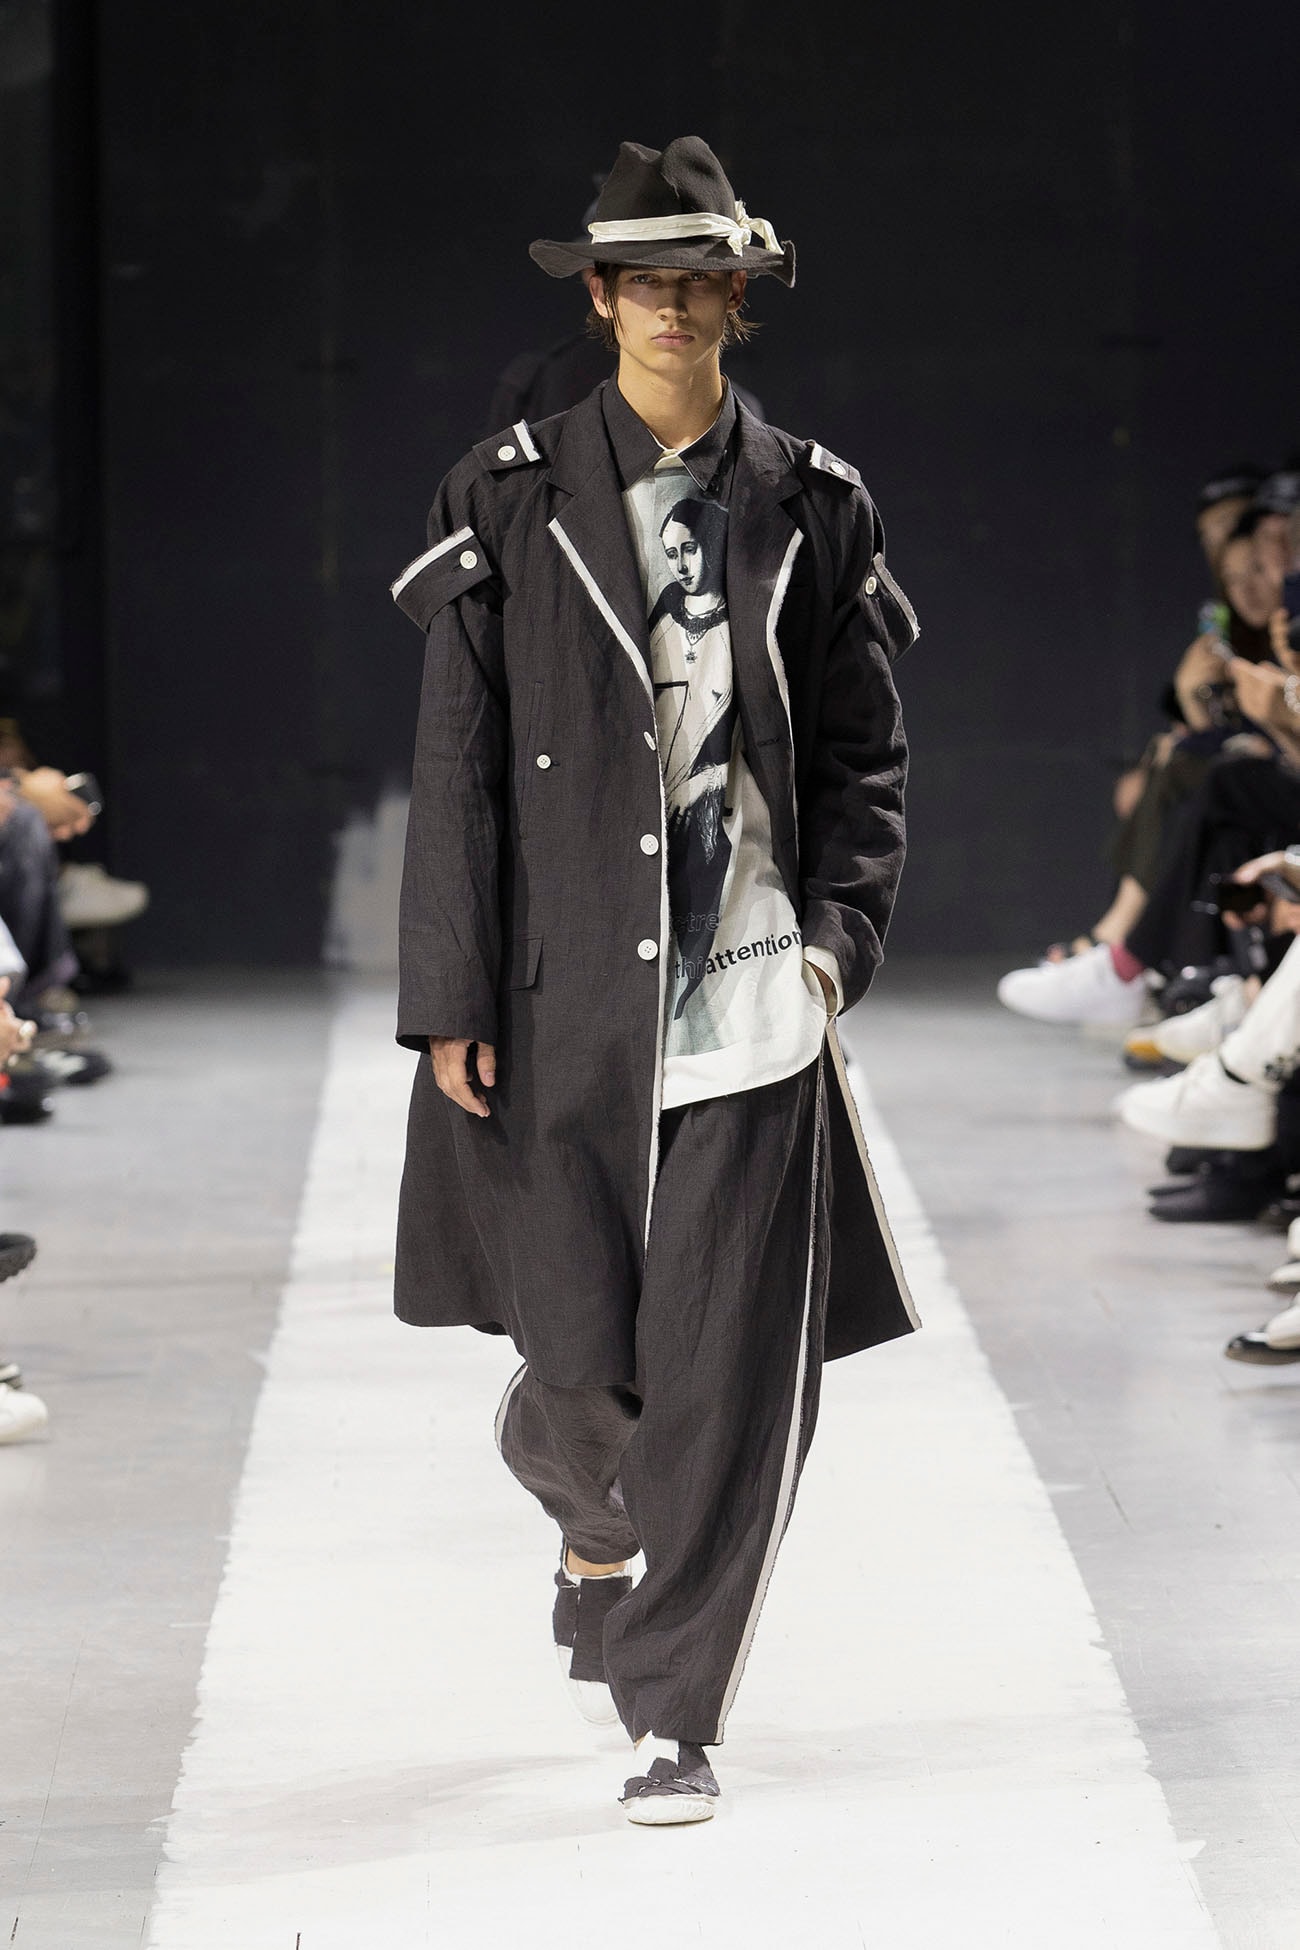 HEMP CLOTH K-SHOULDER EPAULET LONG J(XS Black): Yohji Yamamoto